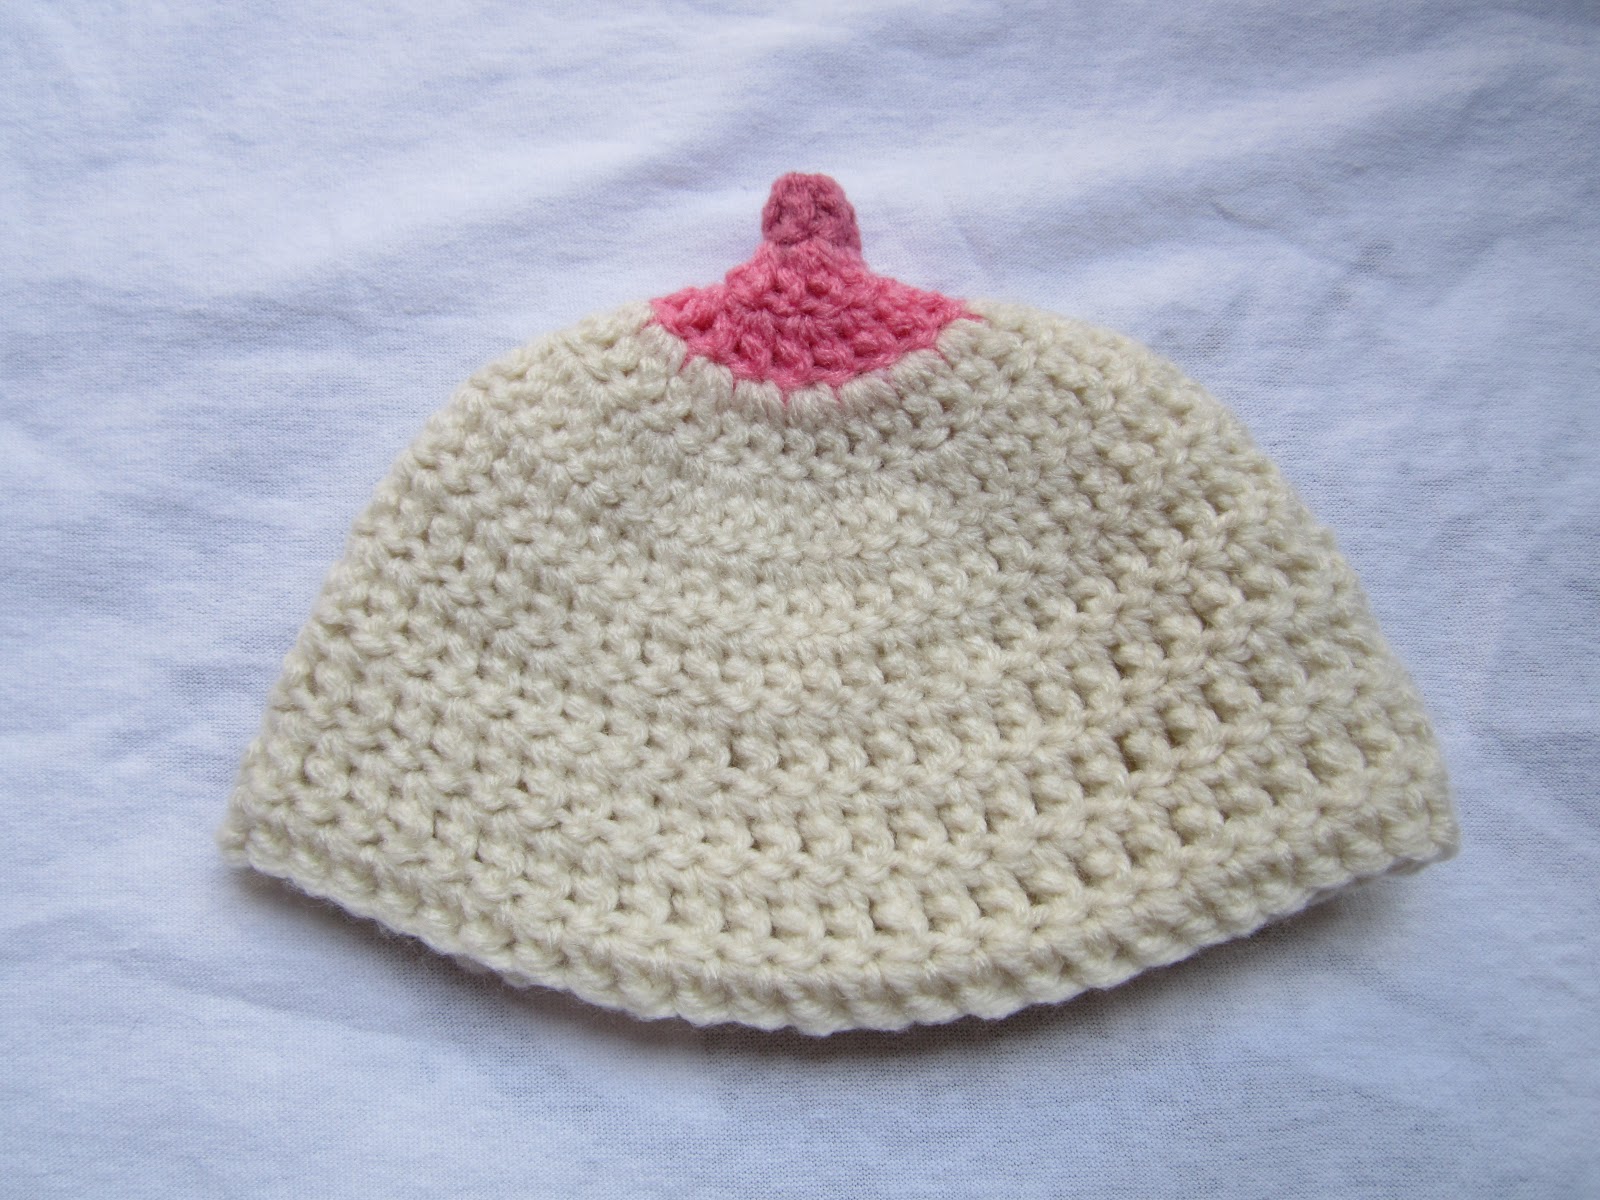 Fun crocheted boobie beanie breastfeeding hat 9-12 M.